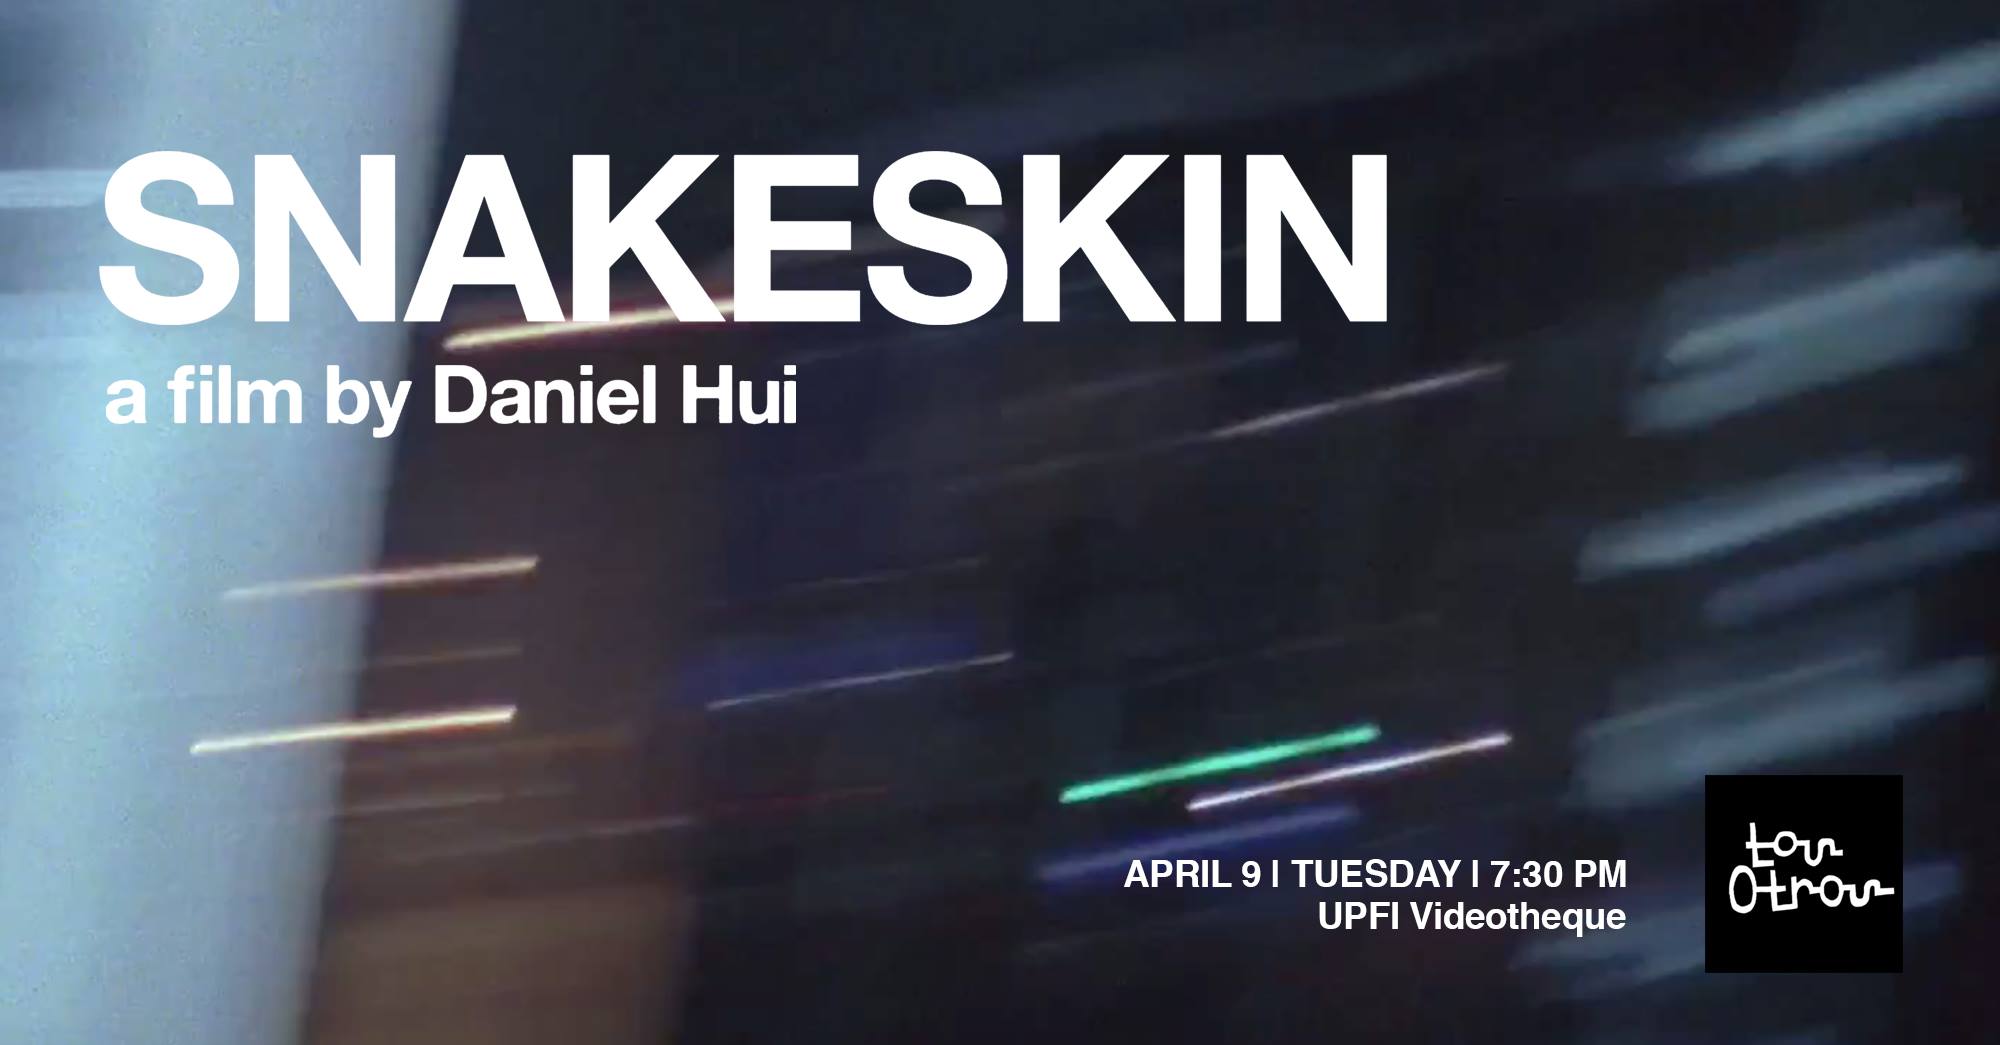 Daniel Hui’s Snakeskin will be screening at the UPFI!